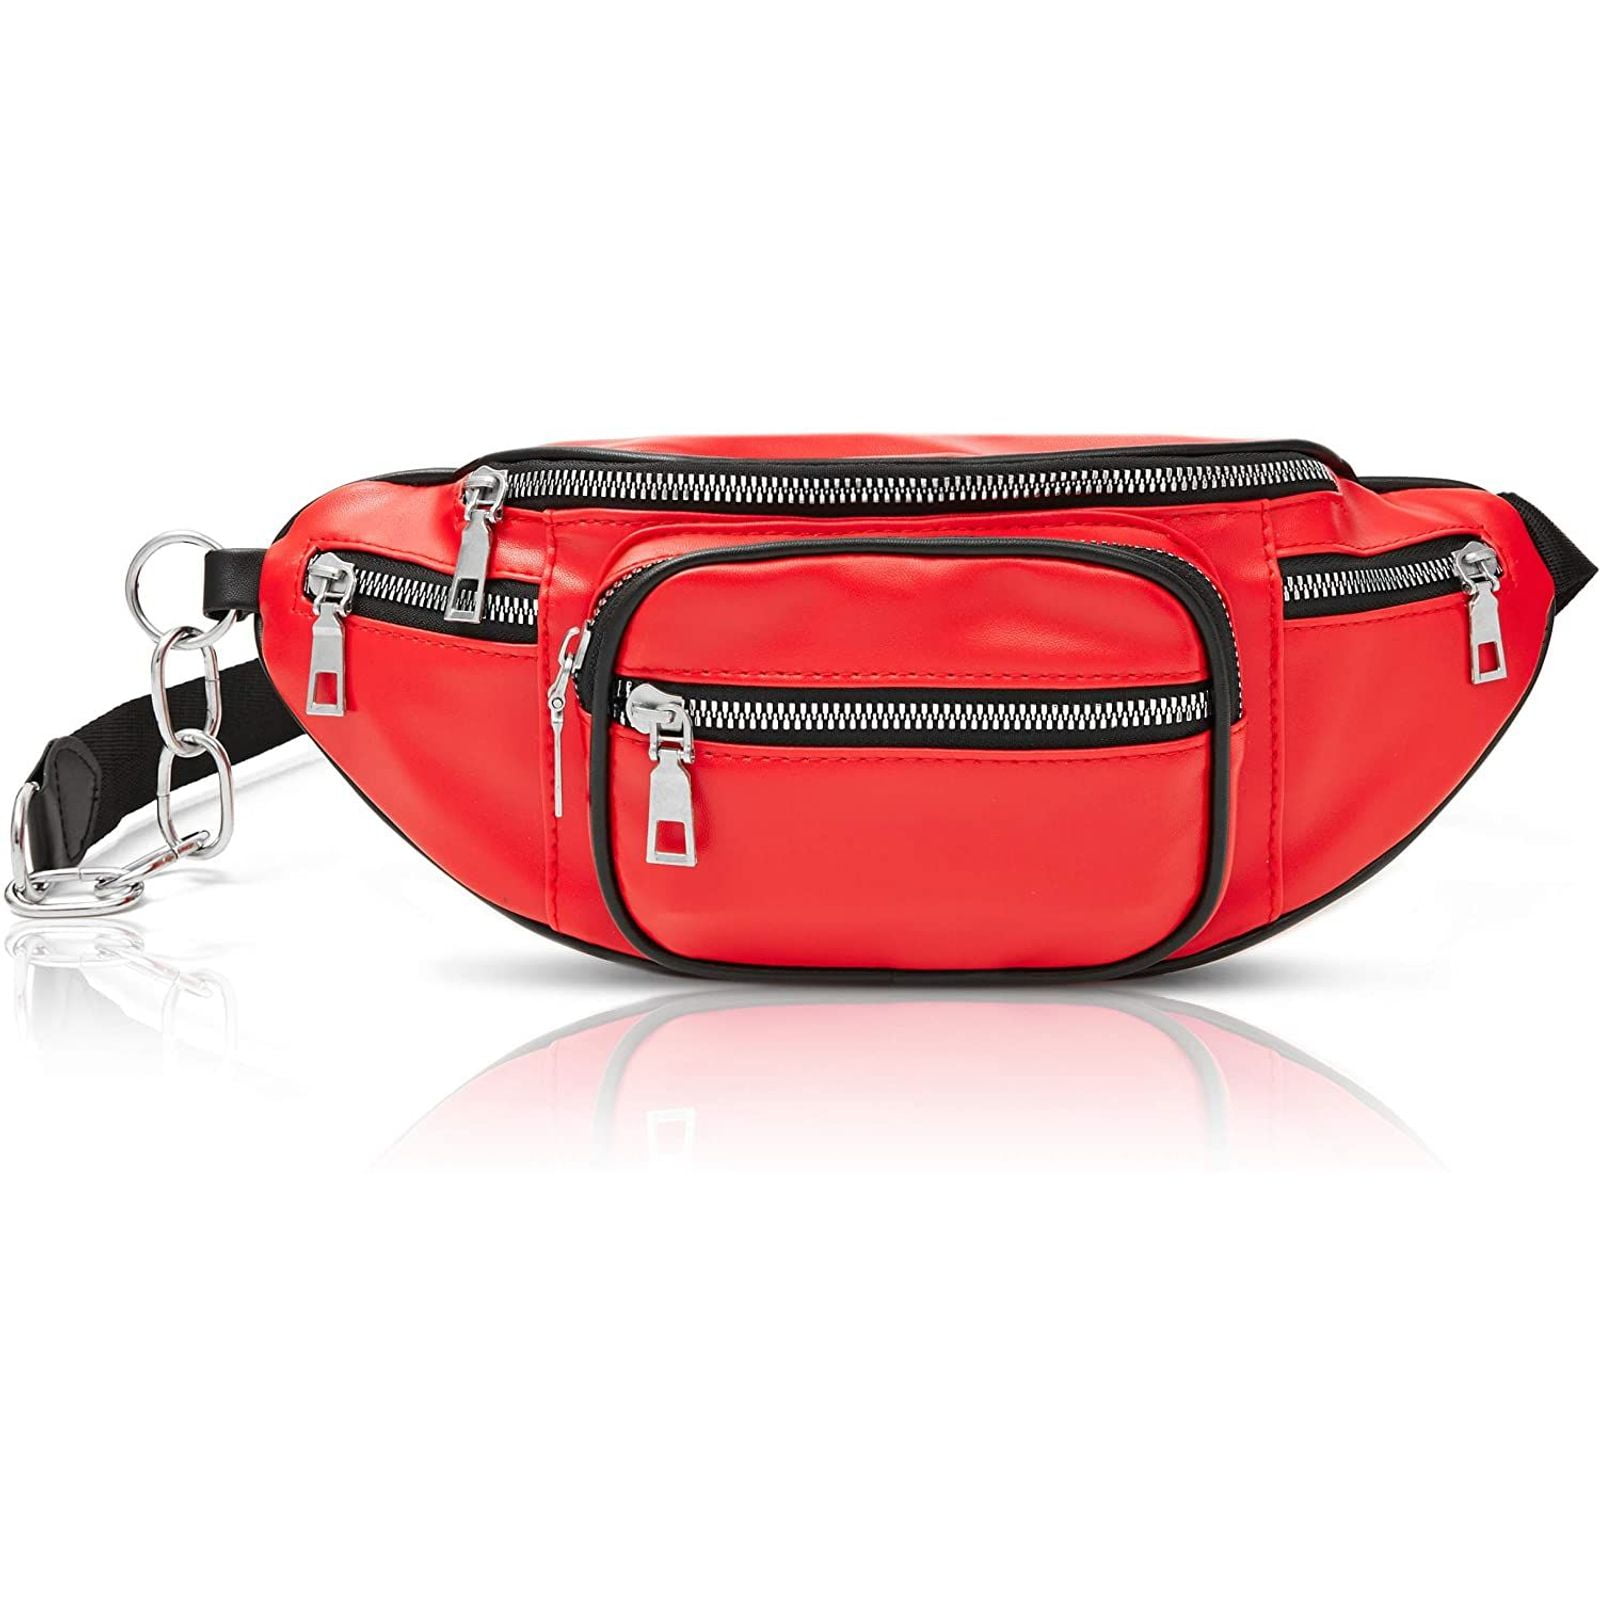 Hot Hight Quality Fashion Female PU Leather Waist Bags Travel Packs Black Red Women Money Belt Bag 